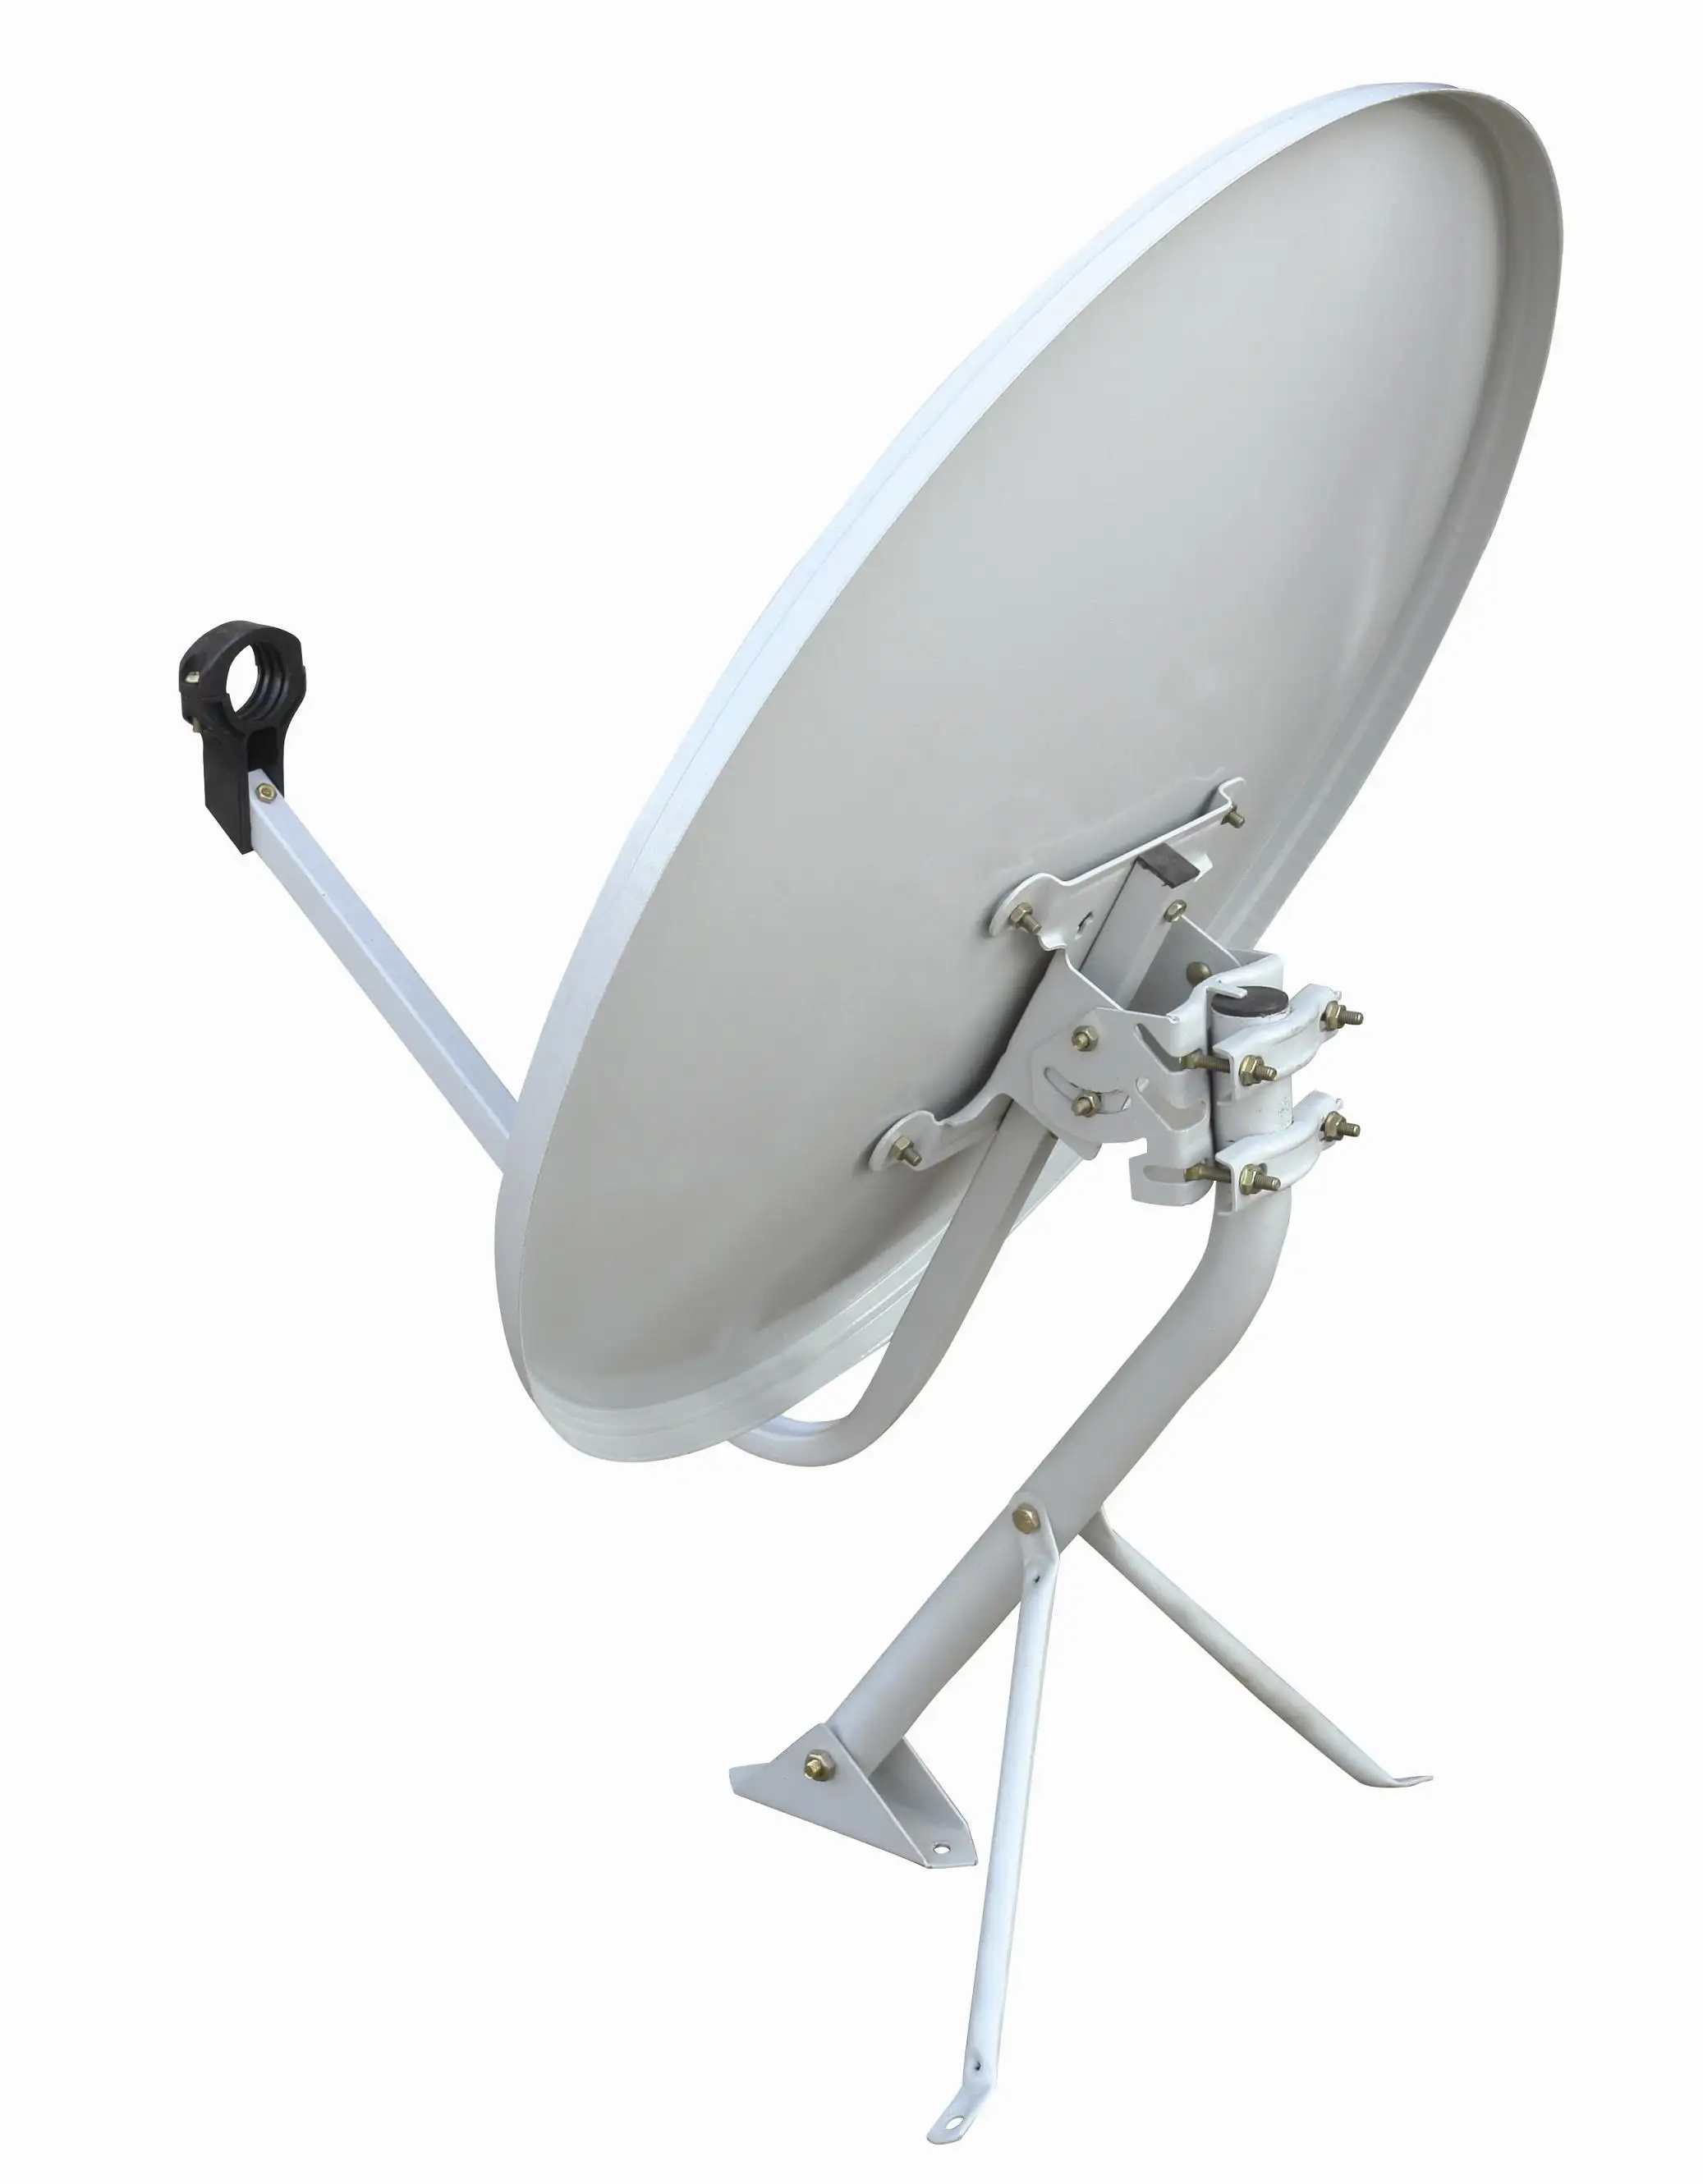 New Selling Long Range Hdtv Clear Satellite Dish Antenna Ku Band 75*80CM HD Parabolic Solid Offset Dish Antenna